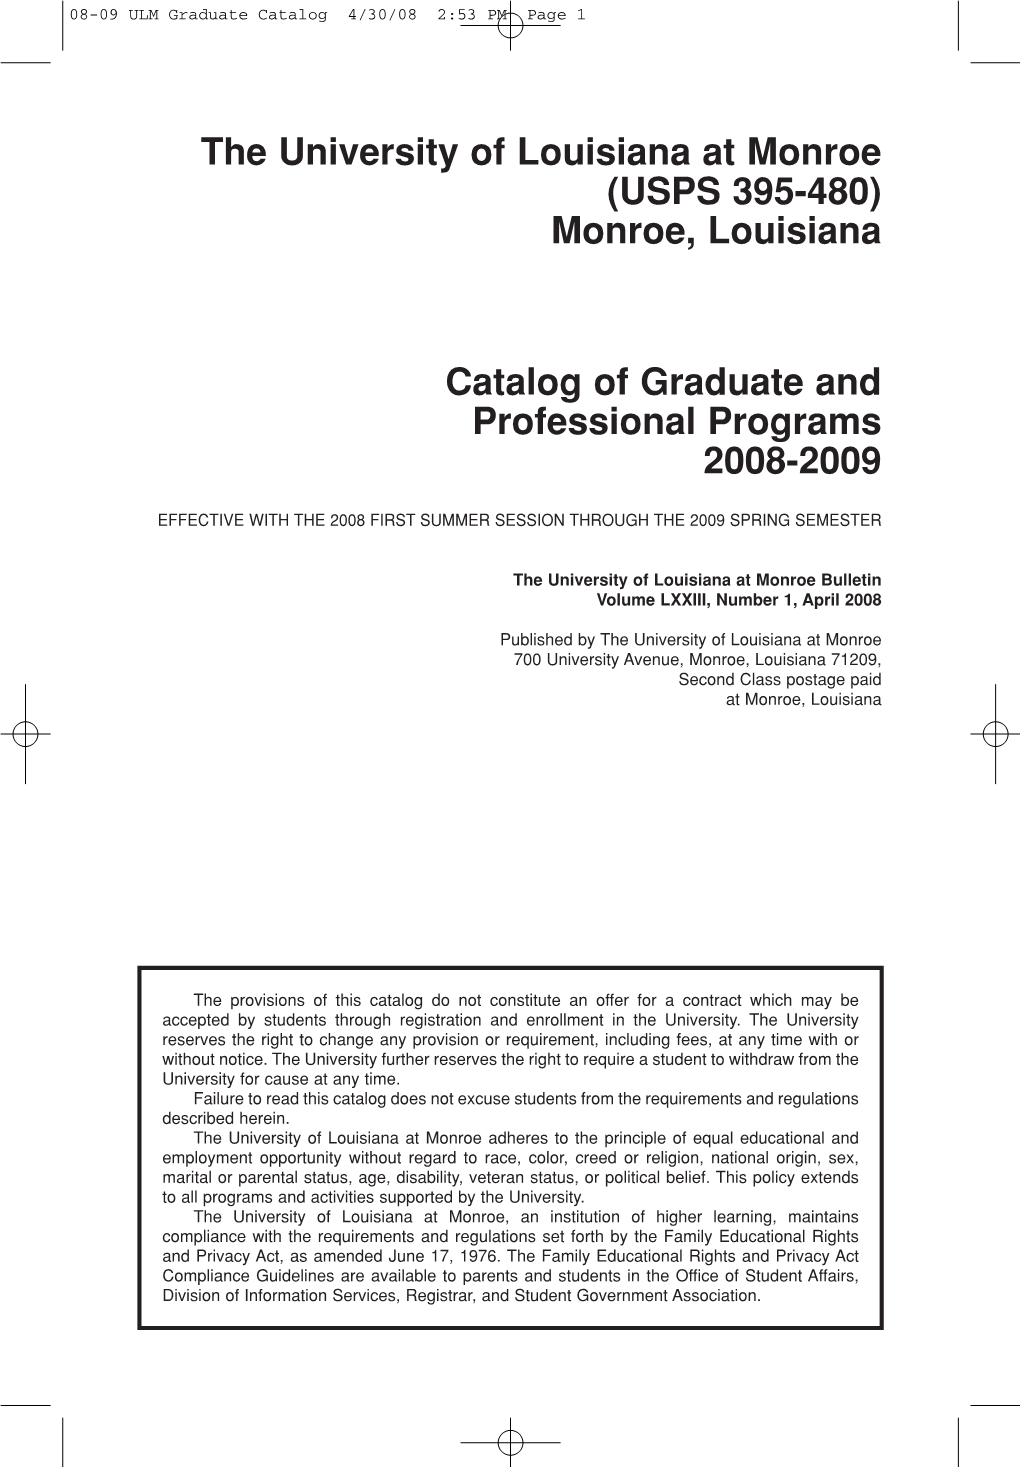 08-09 ULM Graduate Catalog 4/30/08 2:53 PM Page 1